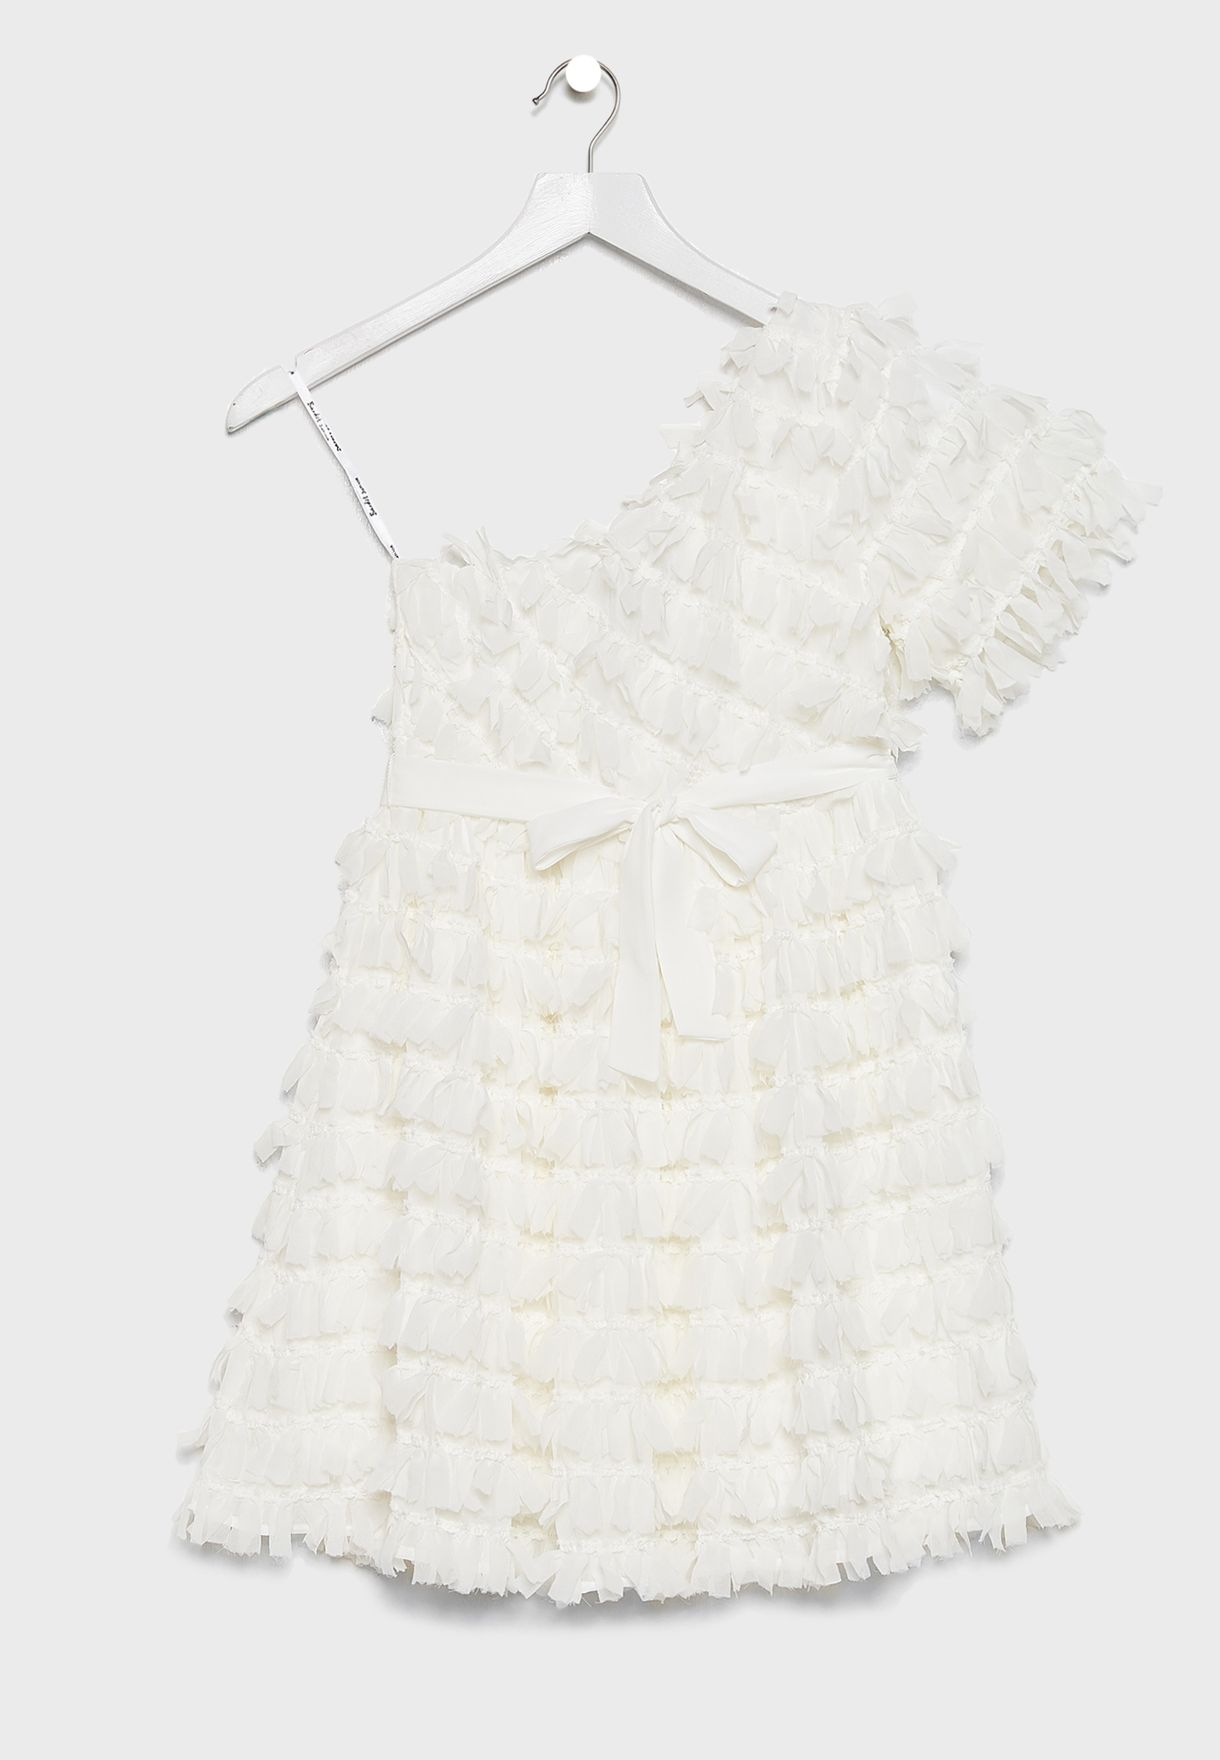 bardot junior white dress